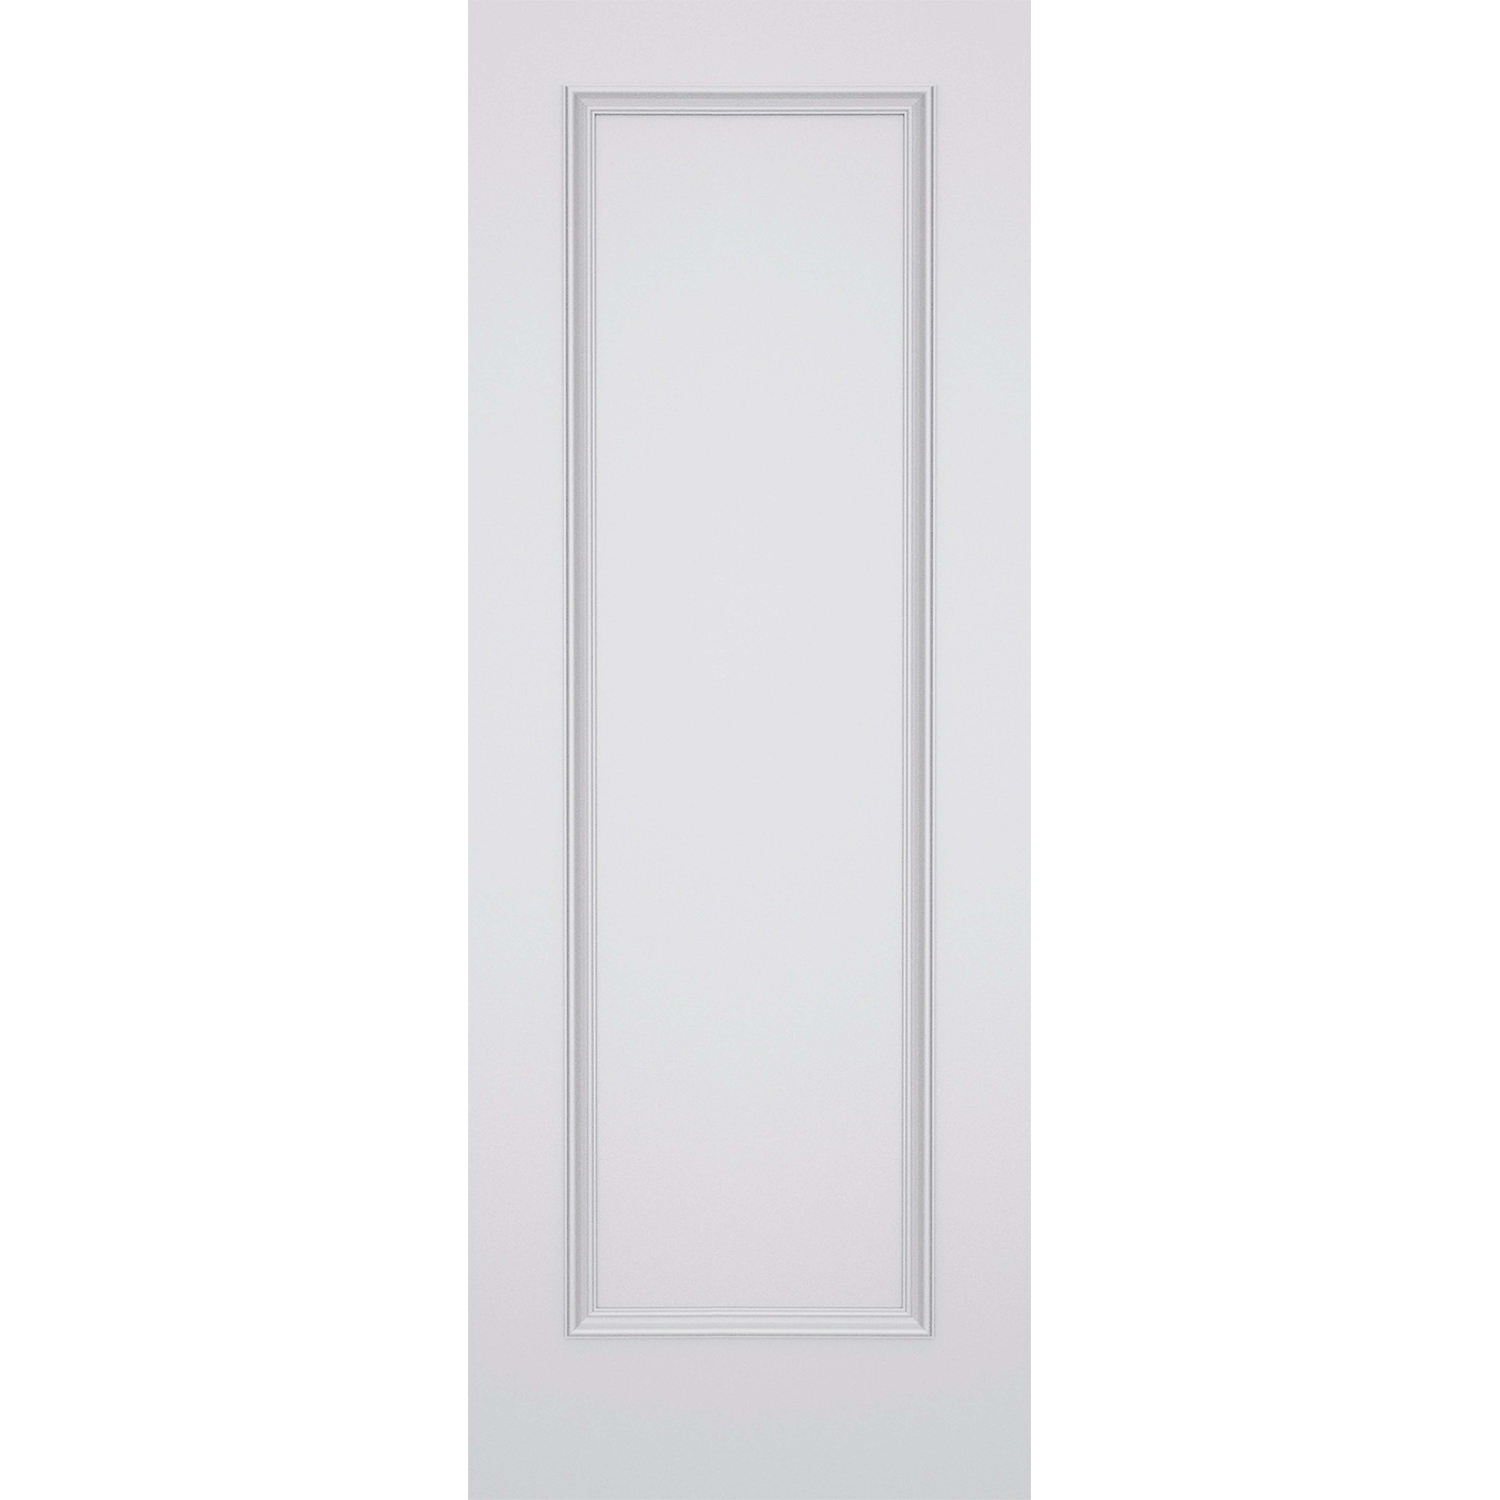 1 Panel 80 x 30 x 1-3/8 Smooth Hollow Door Raised